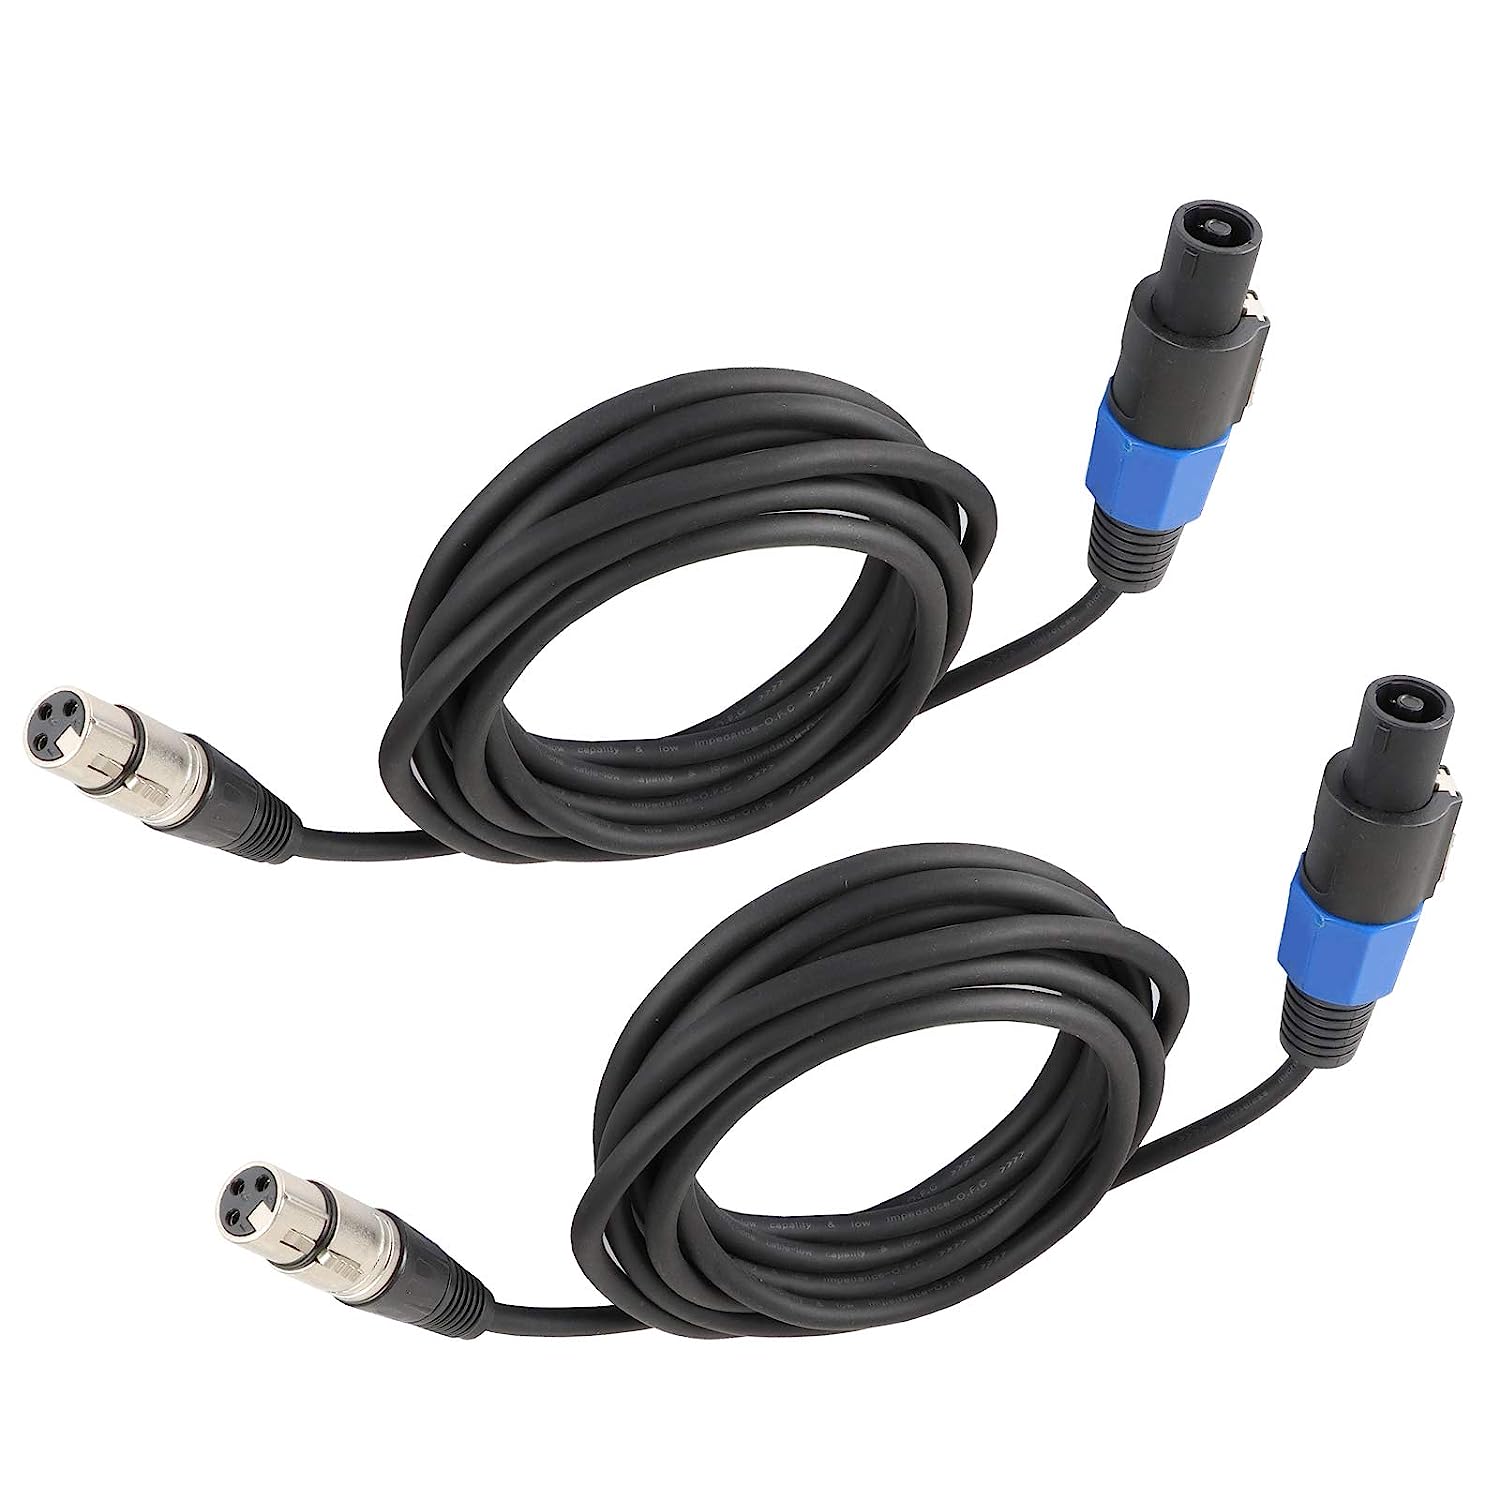 HBU 10FT Pack of 2 SpeakOn to XLR Cable - 2pcs 10 Feet [...]